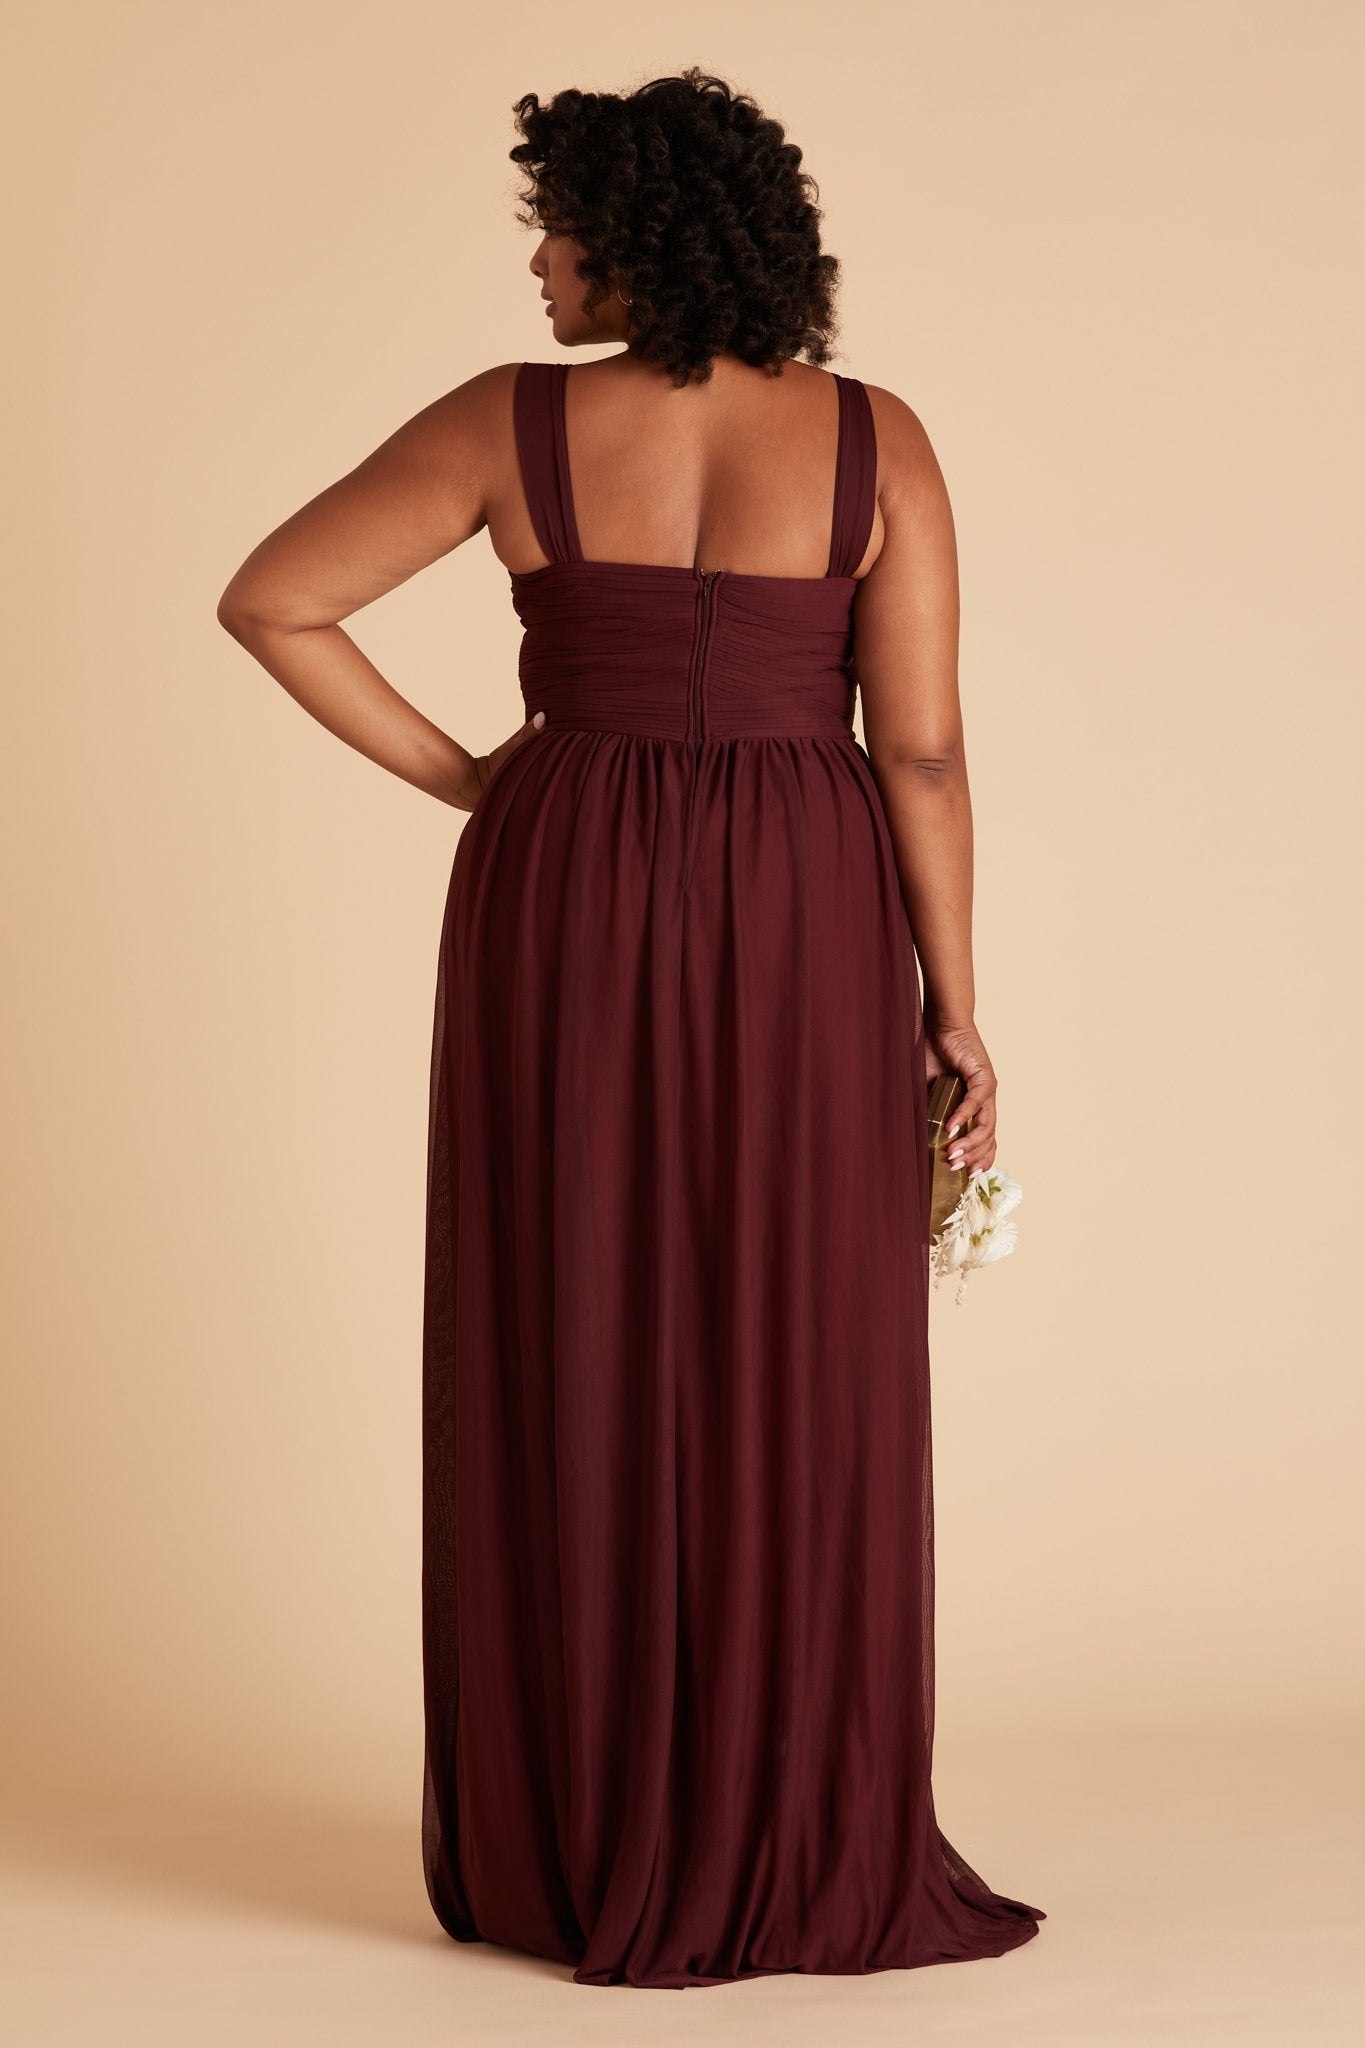 Elsye plus size bridesmaid dress in cabernet burgundy chiffon by Birdy Grey, back view